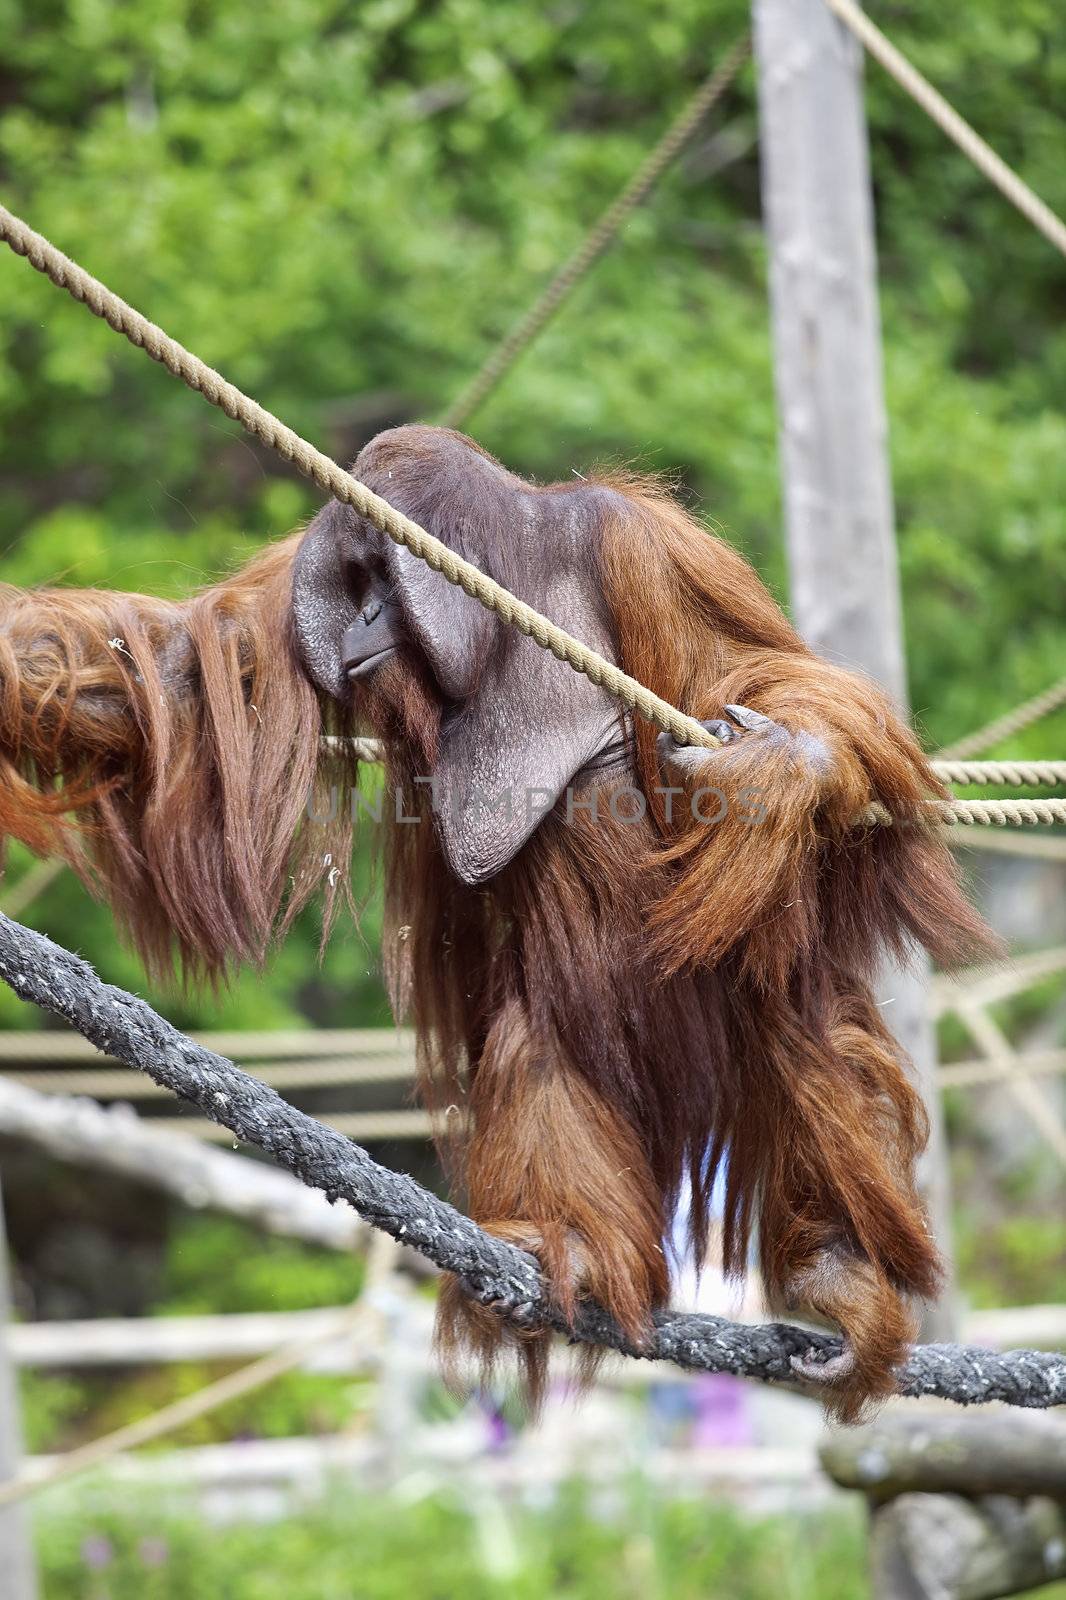 Orangutan climbing up the ropes in a rehabilitation centre